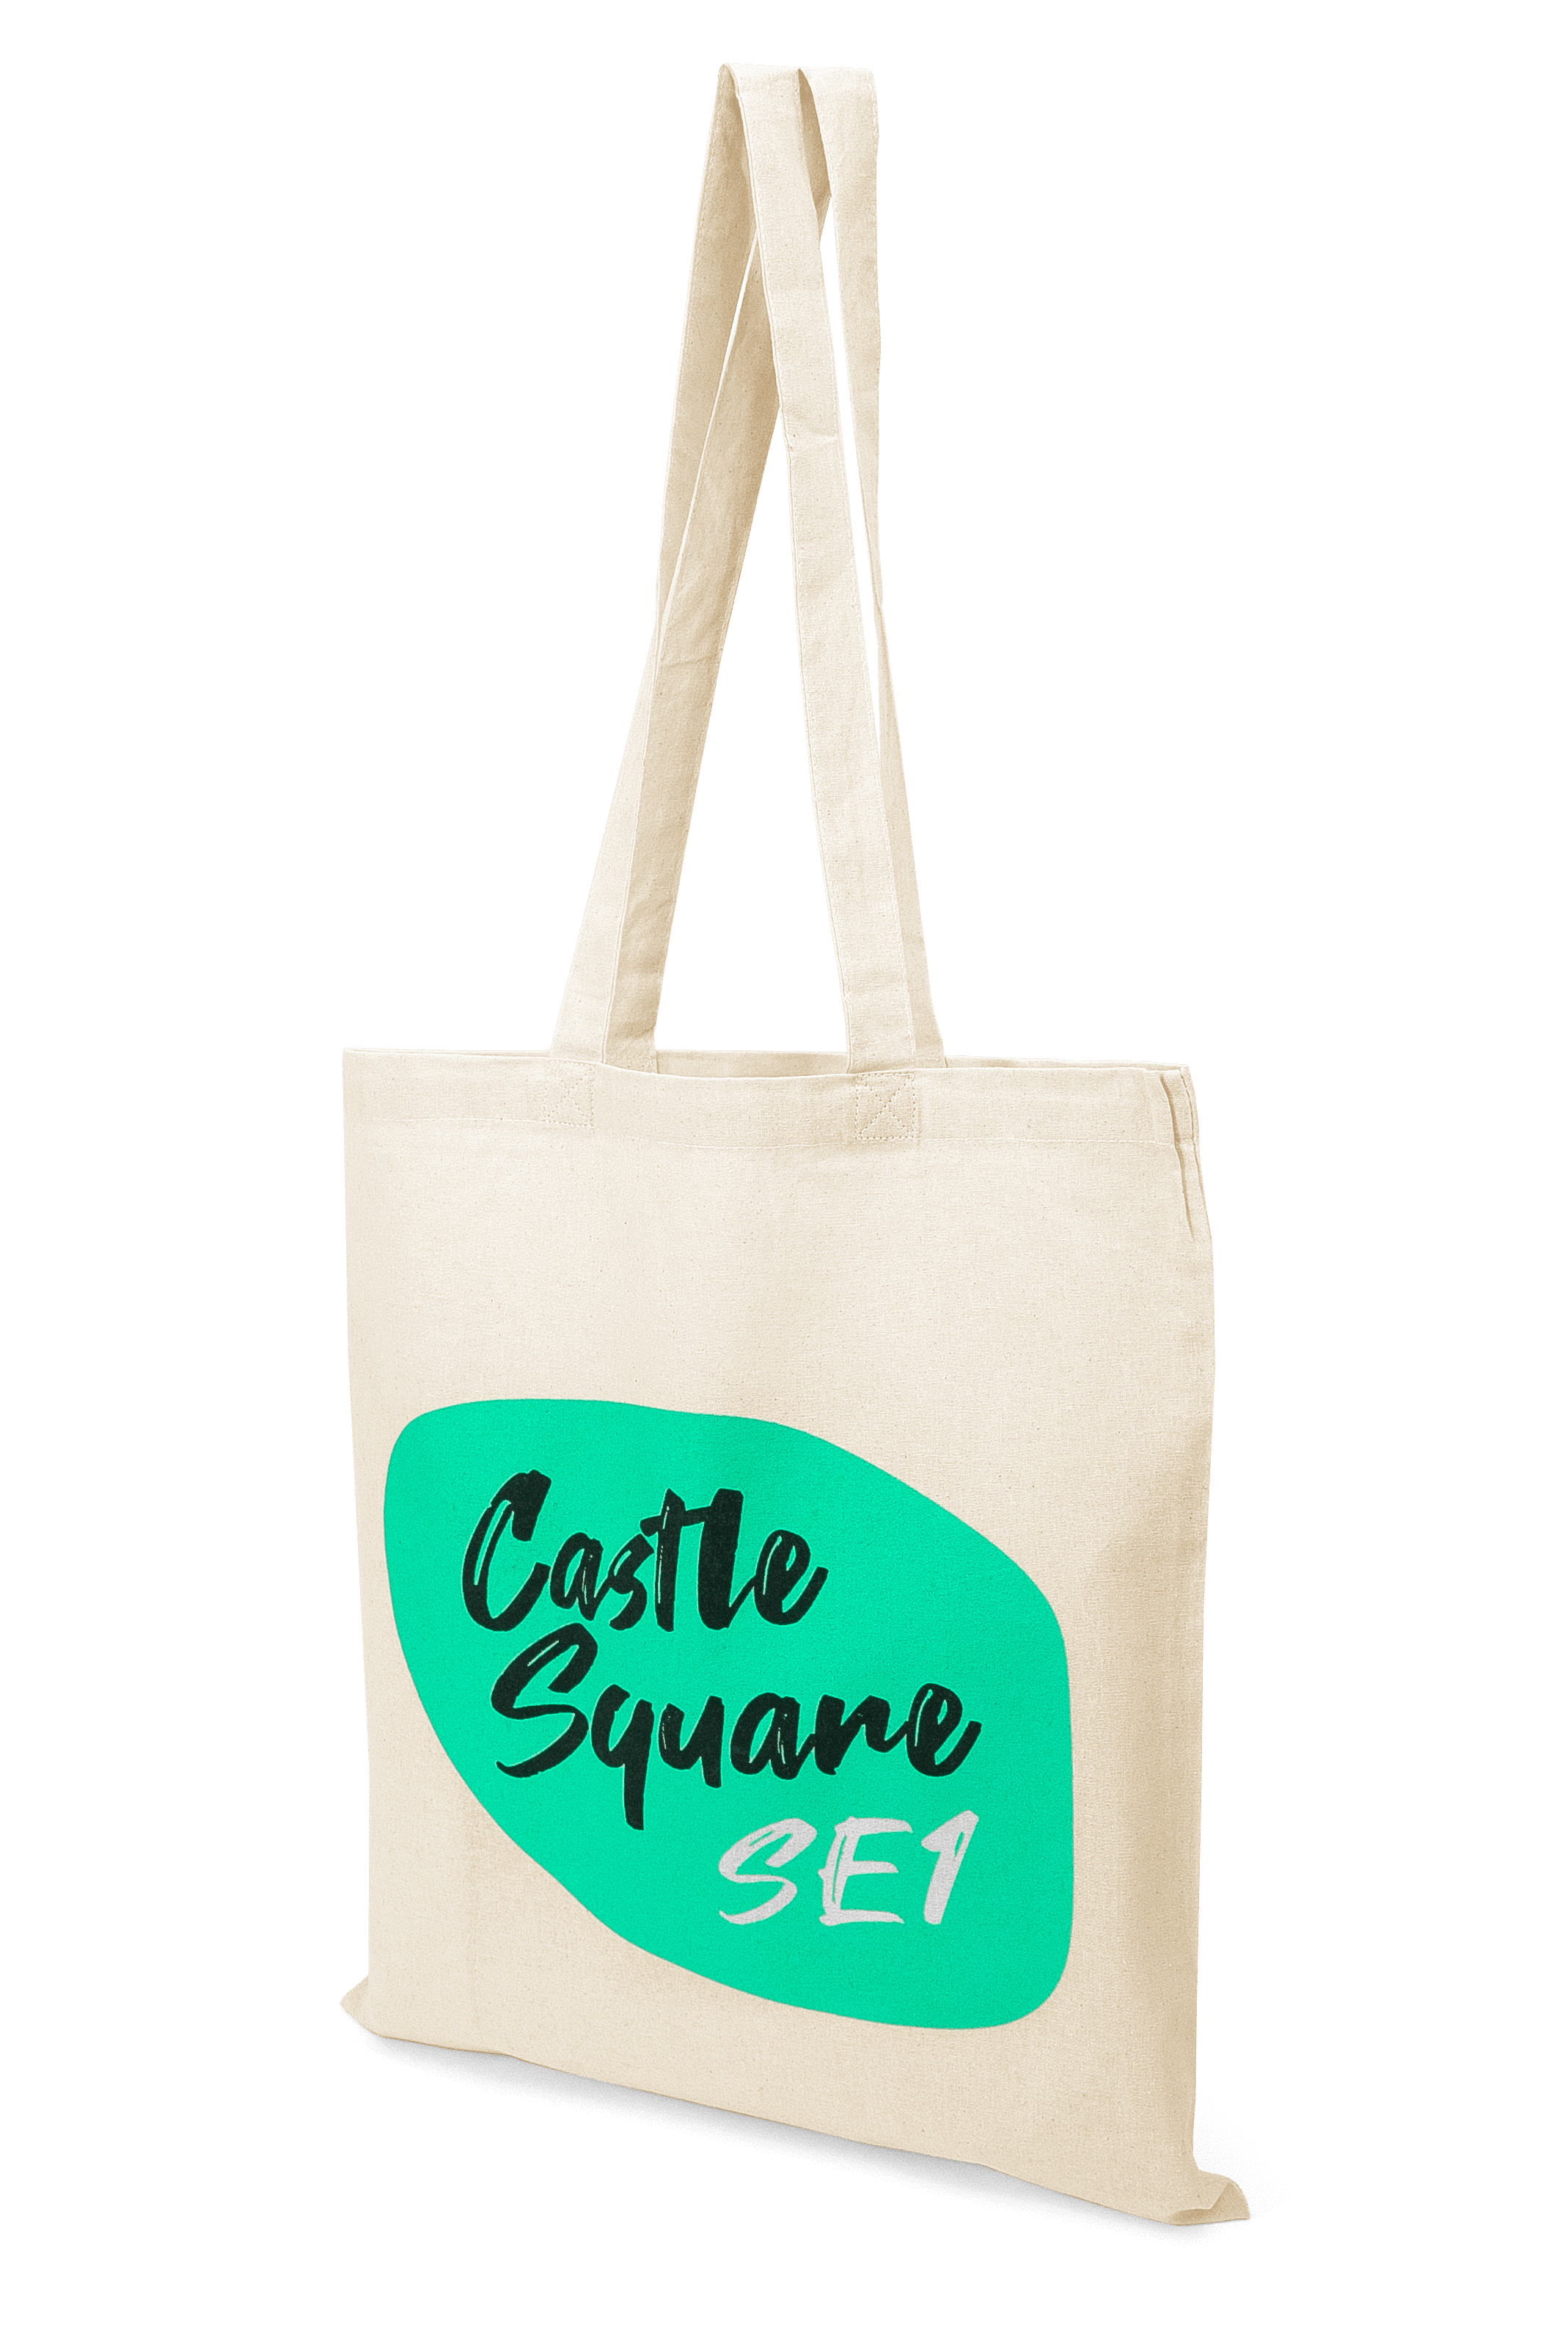 Printed Cotton Bags, Buy Custom Tote Bags Online